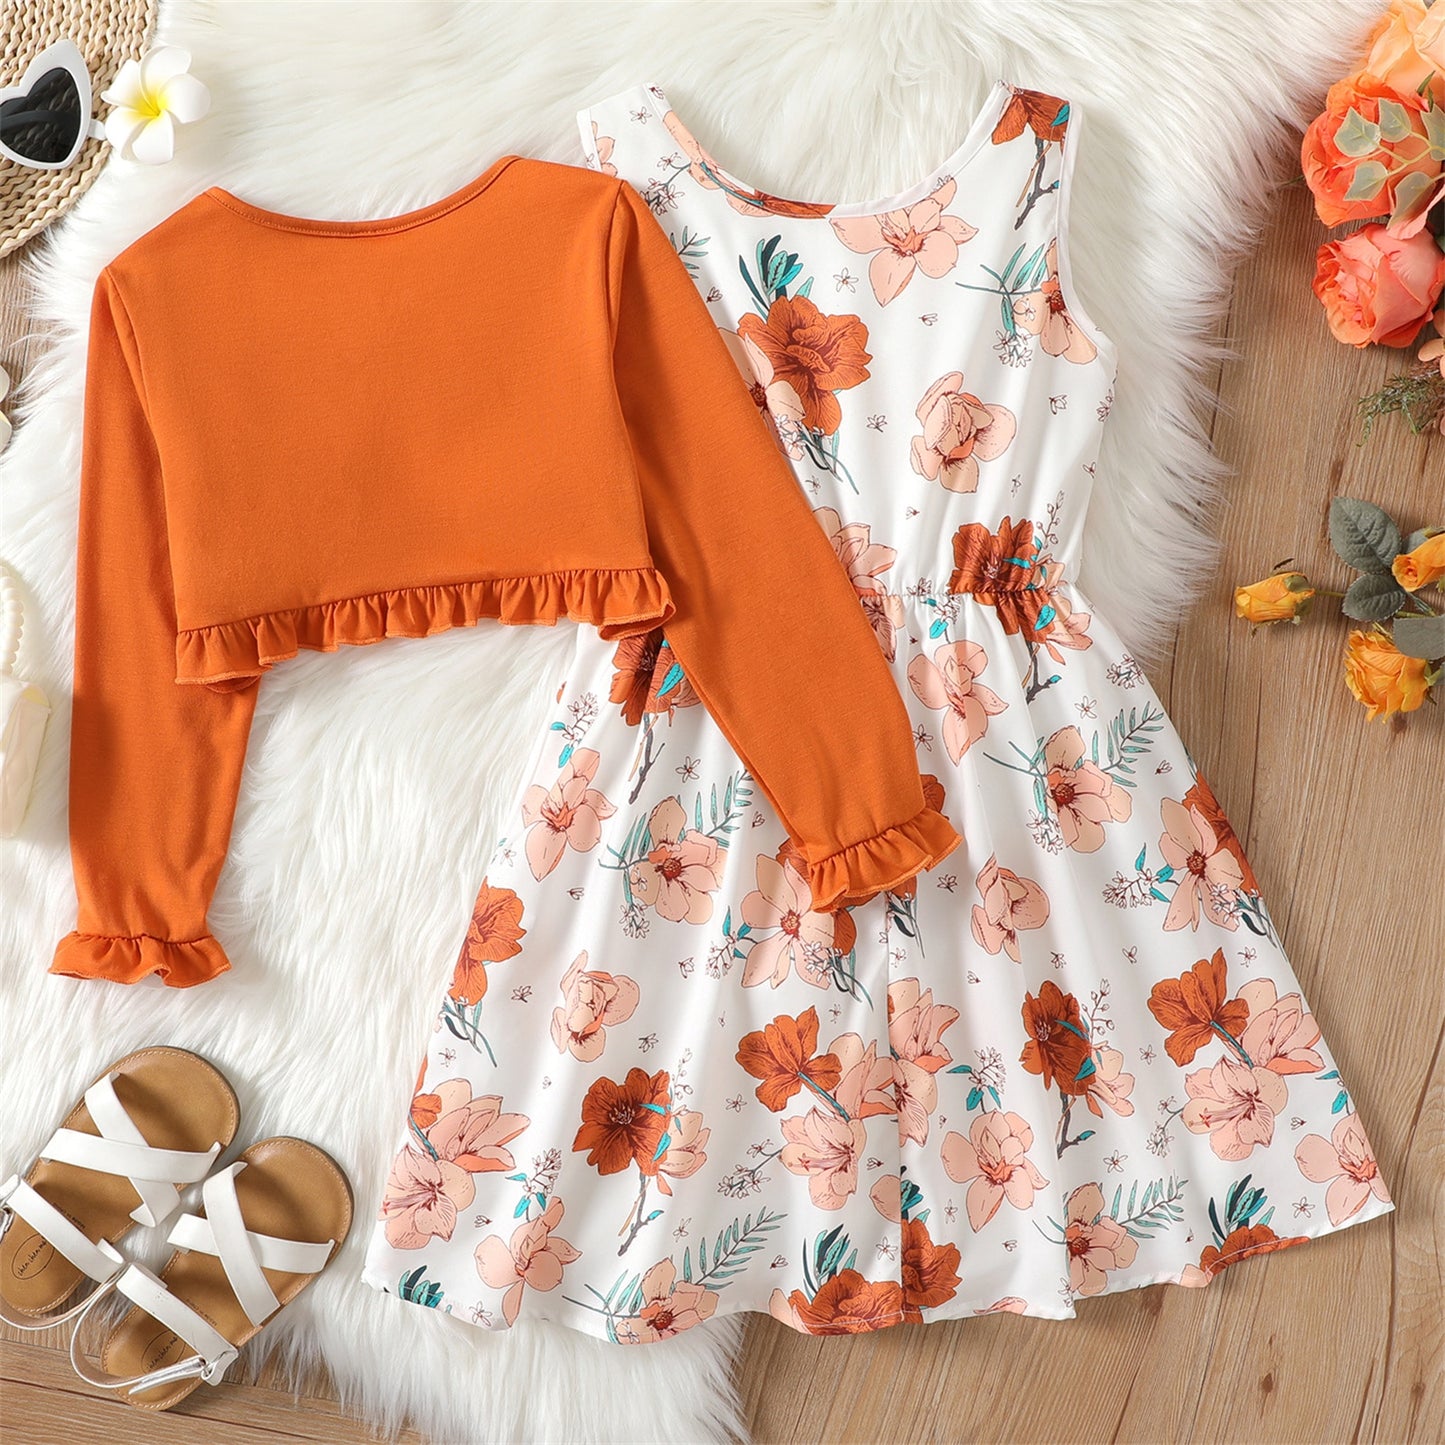 PatPat 2pcs Girl Kid's Dress Girls' Dress Sets Floral Print Sleeveless Dress and Ruffled Long-sleeve Orange Cardigan Set Dresses